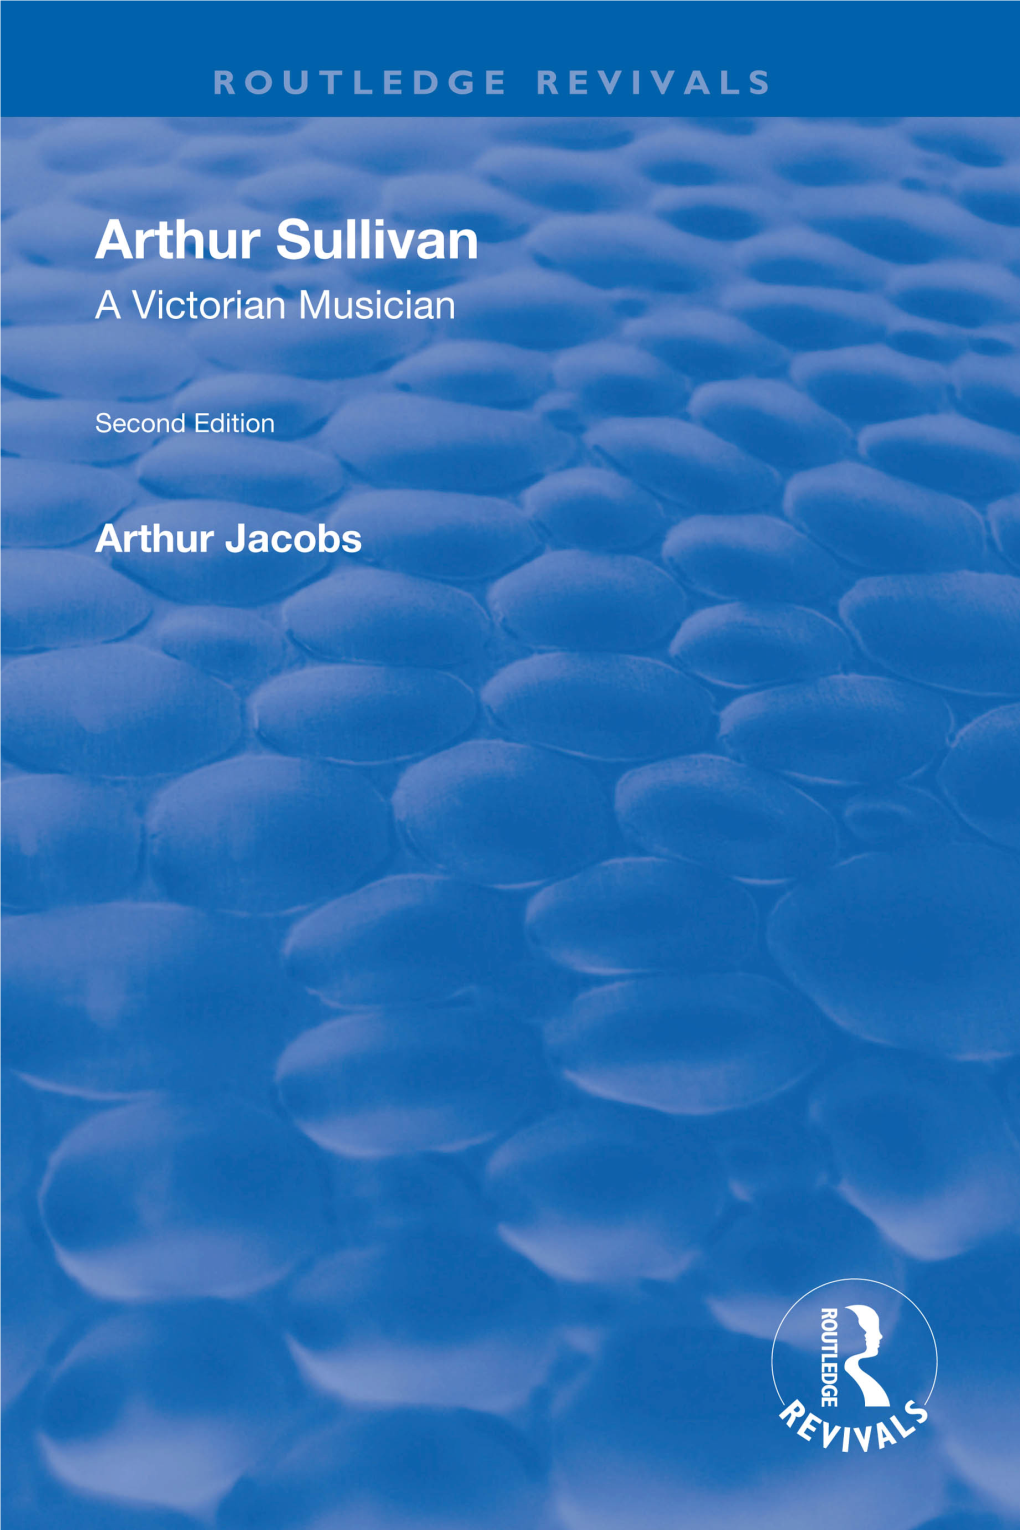 ARTHUR SULLIVAN a VICTORIAN MUSICIAN Second Edition for Betty ARTHUR SULLIVAN a Victorian Musician Second Edition